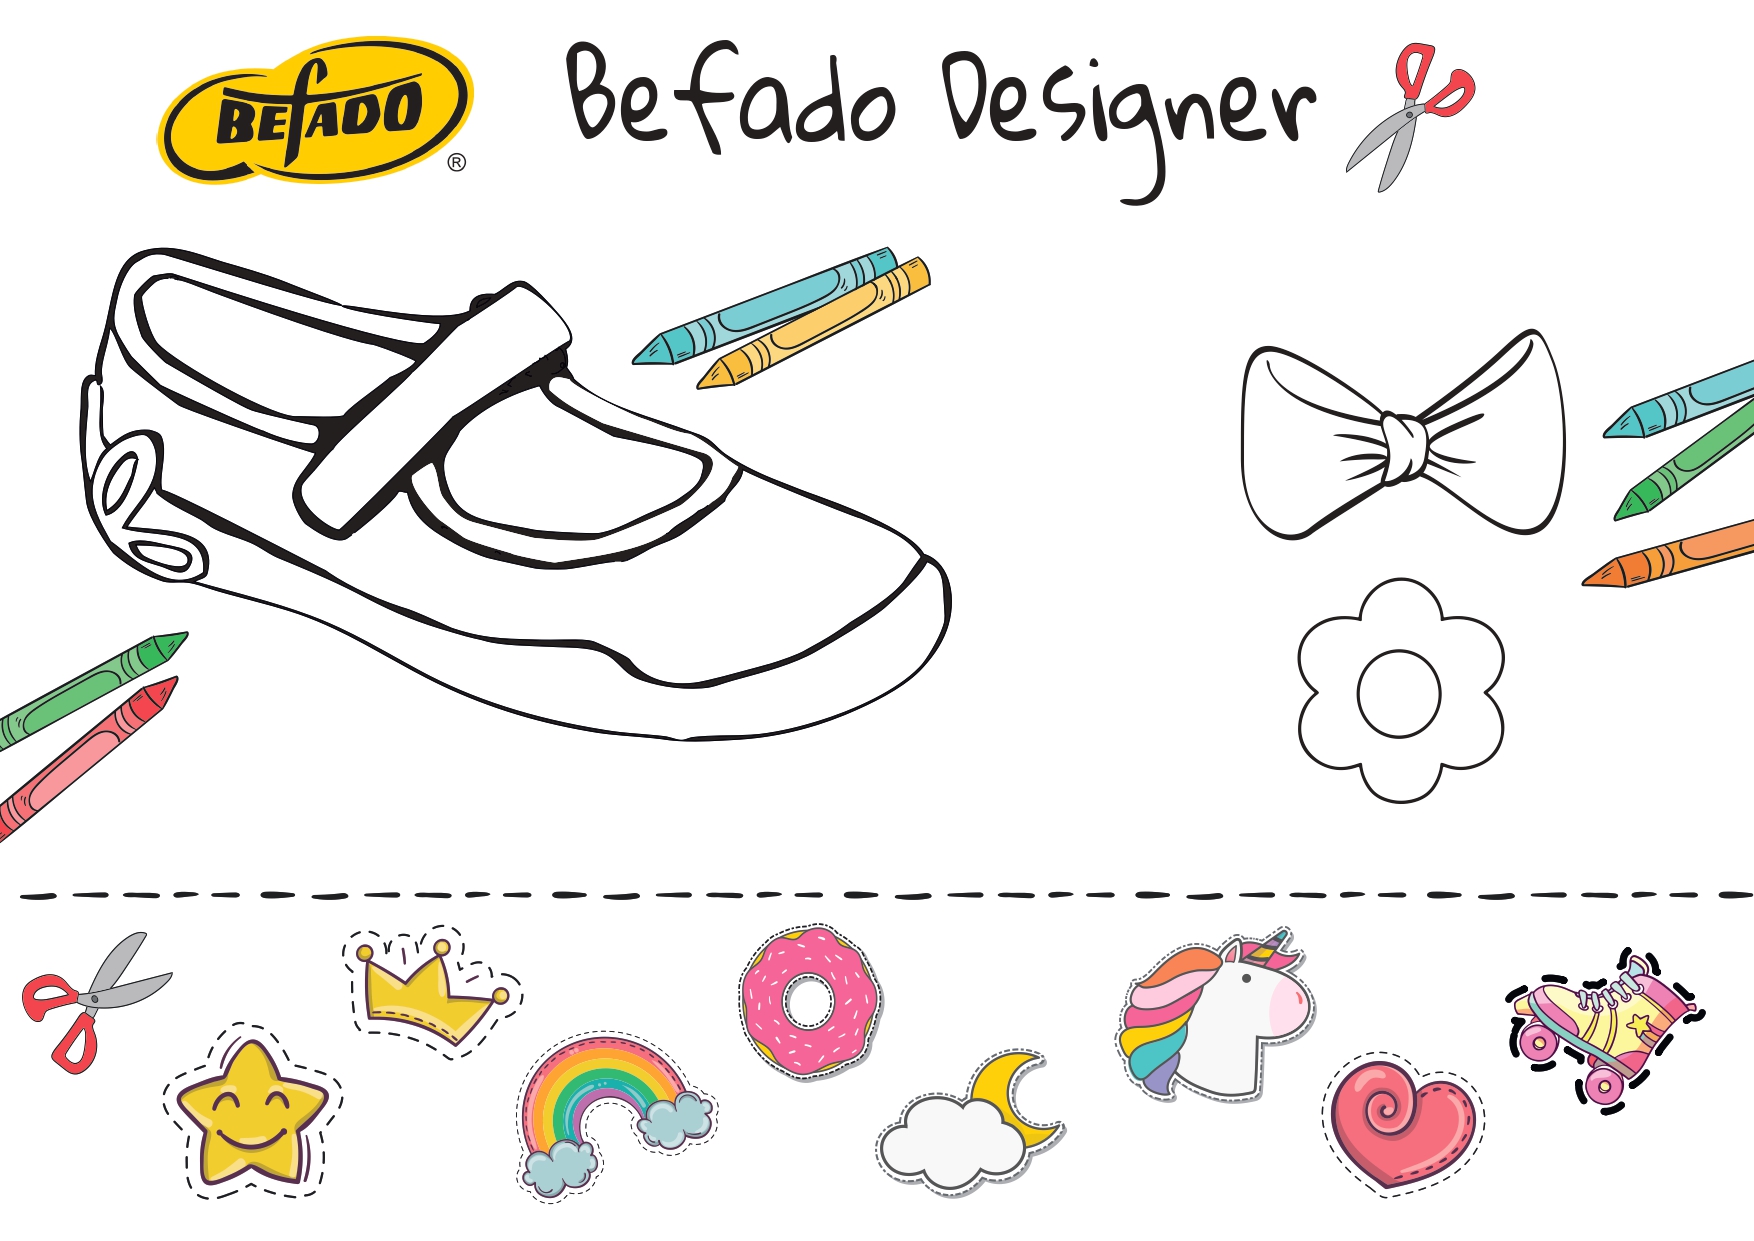 befado-designer_page-0001-_1_.jpg (593.0 kB)